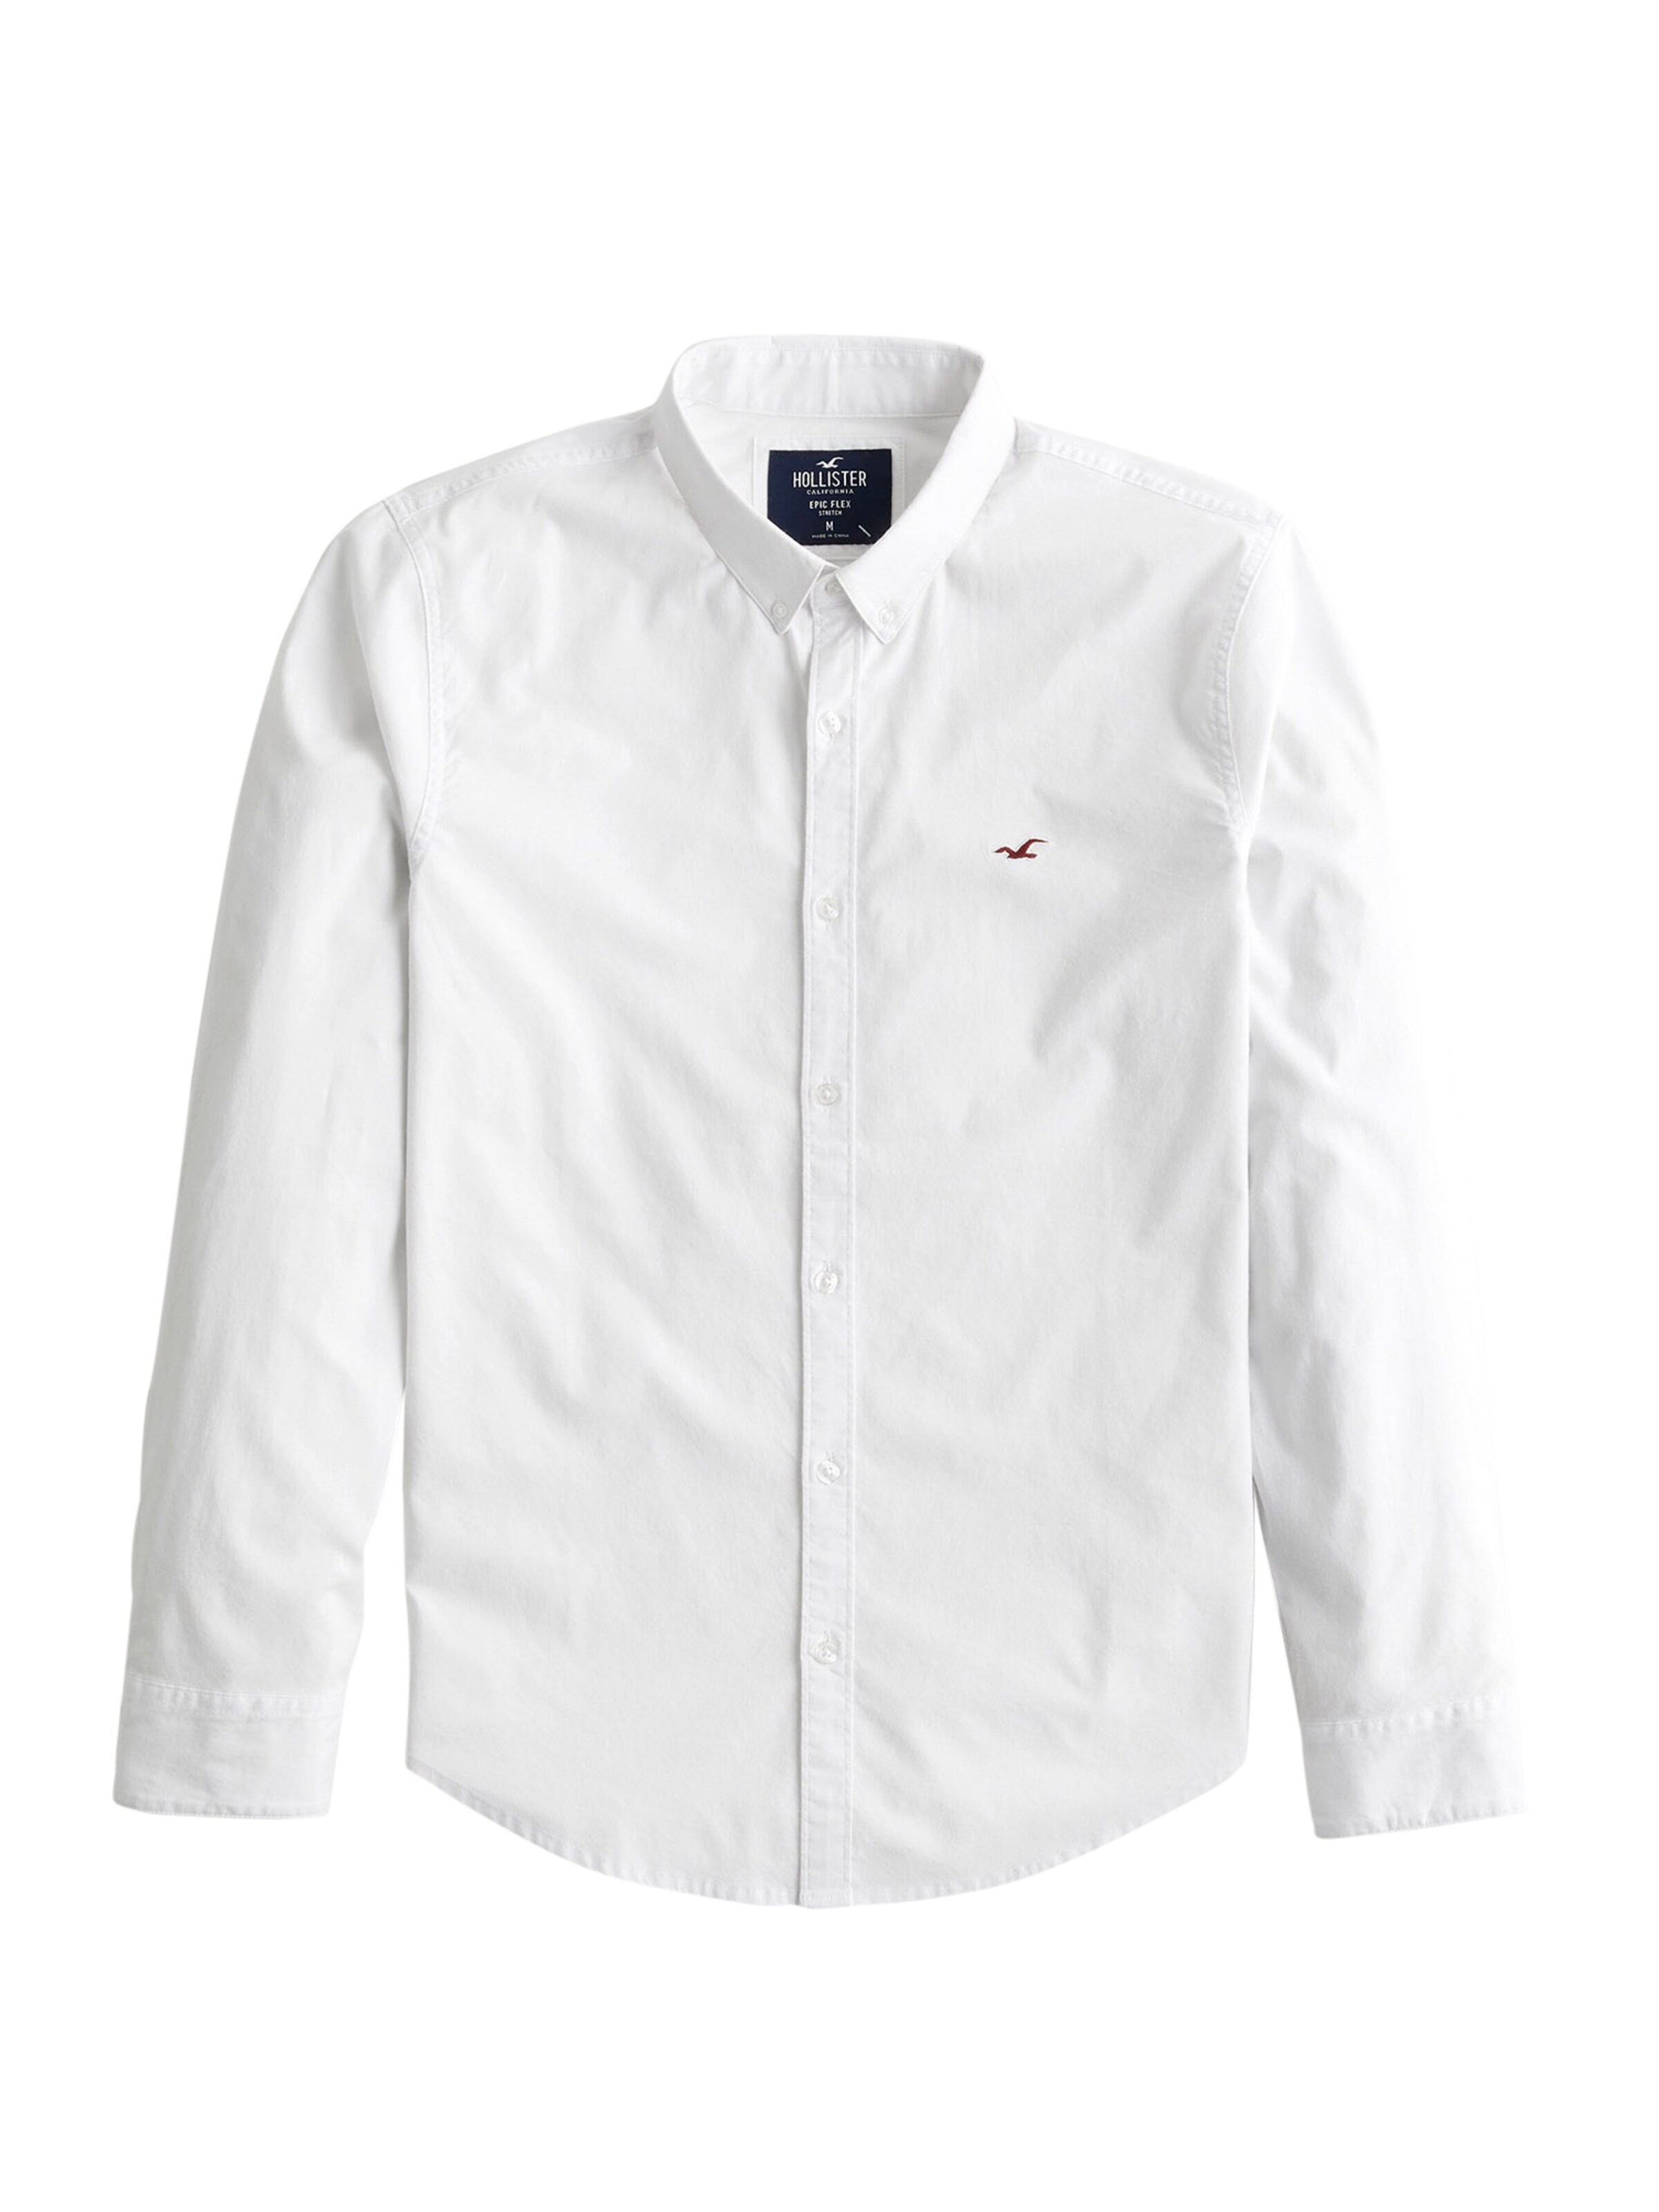 hollister white shirt